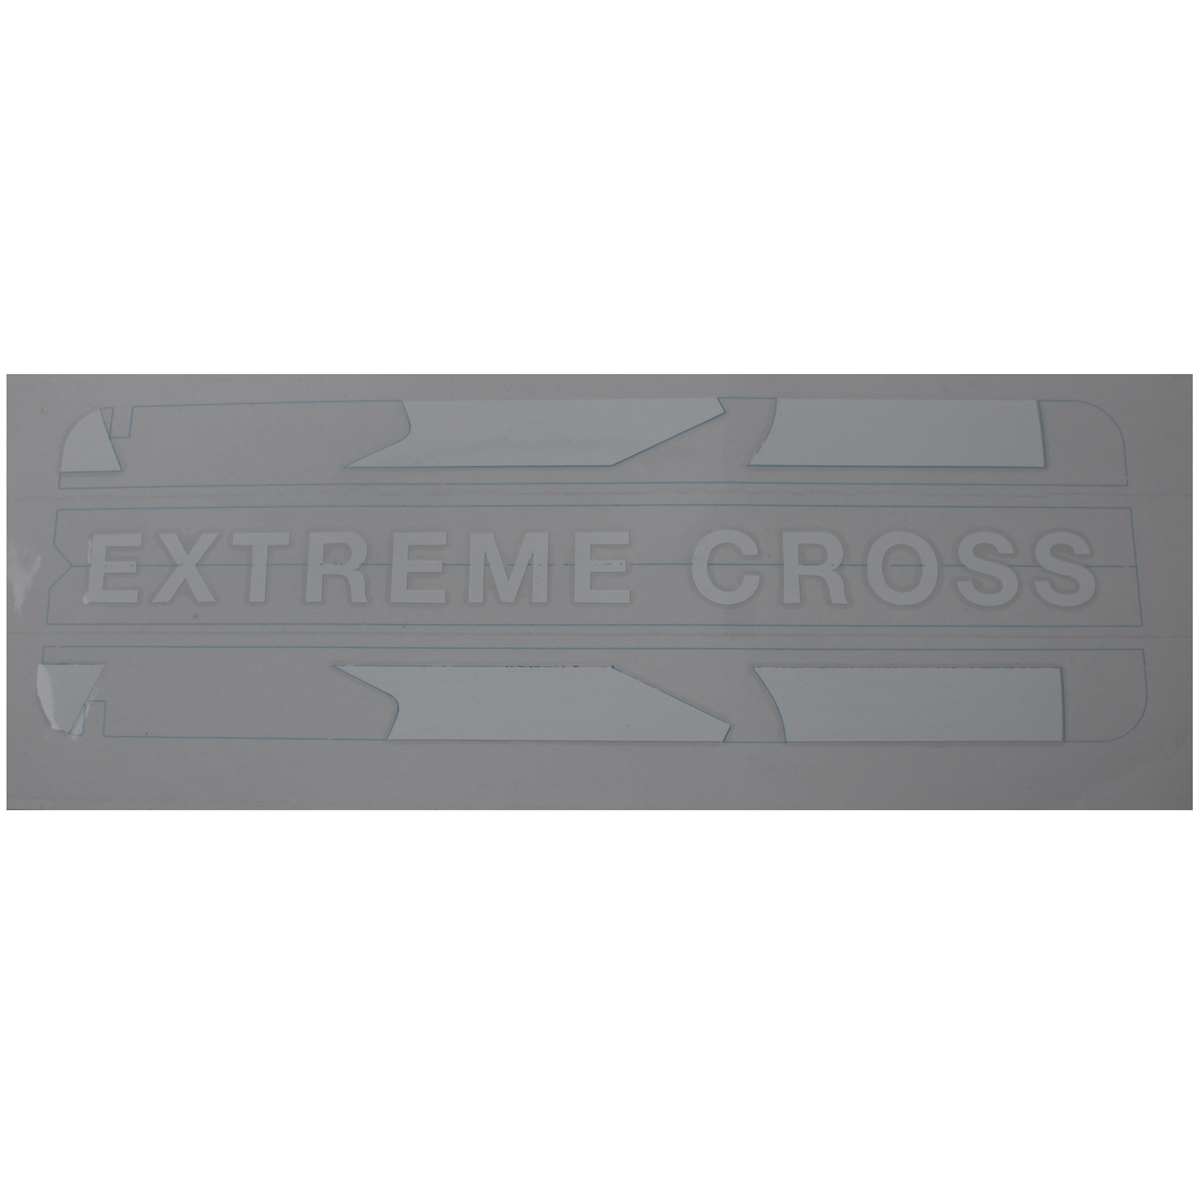 Adesivo cover batteria Extreme Cross bianco